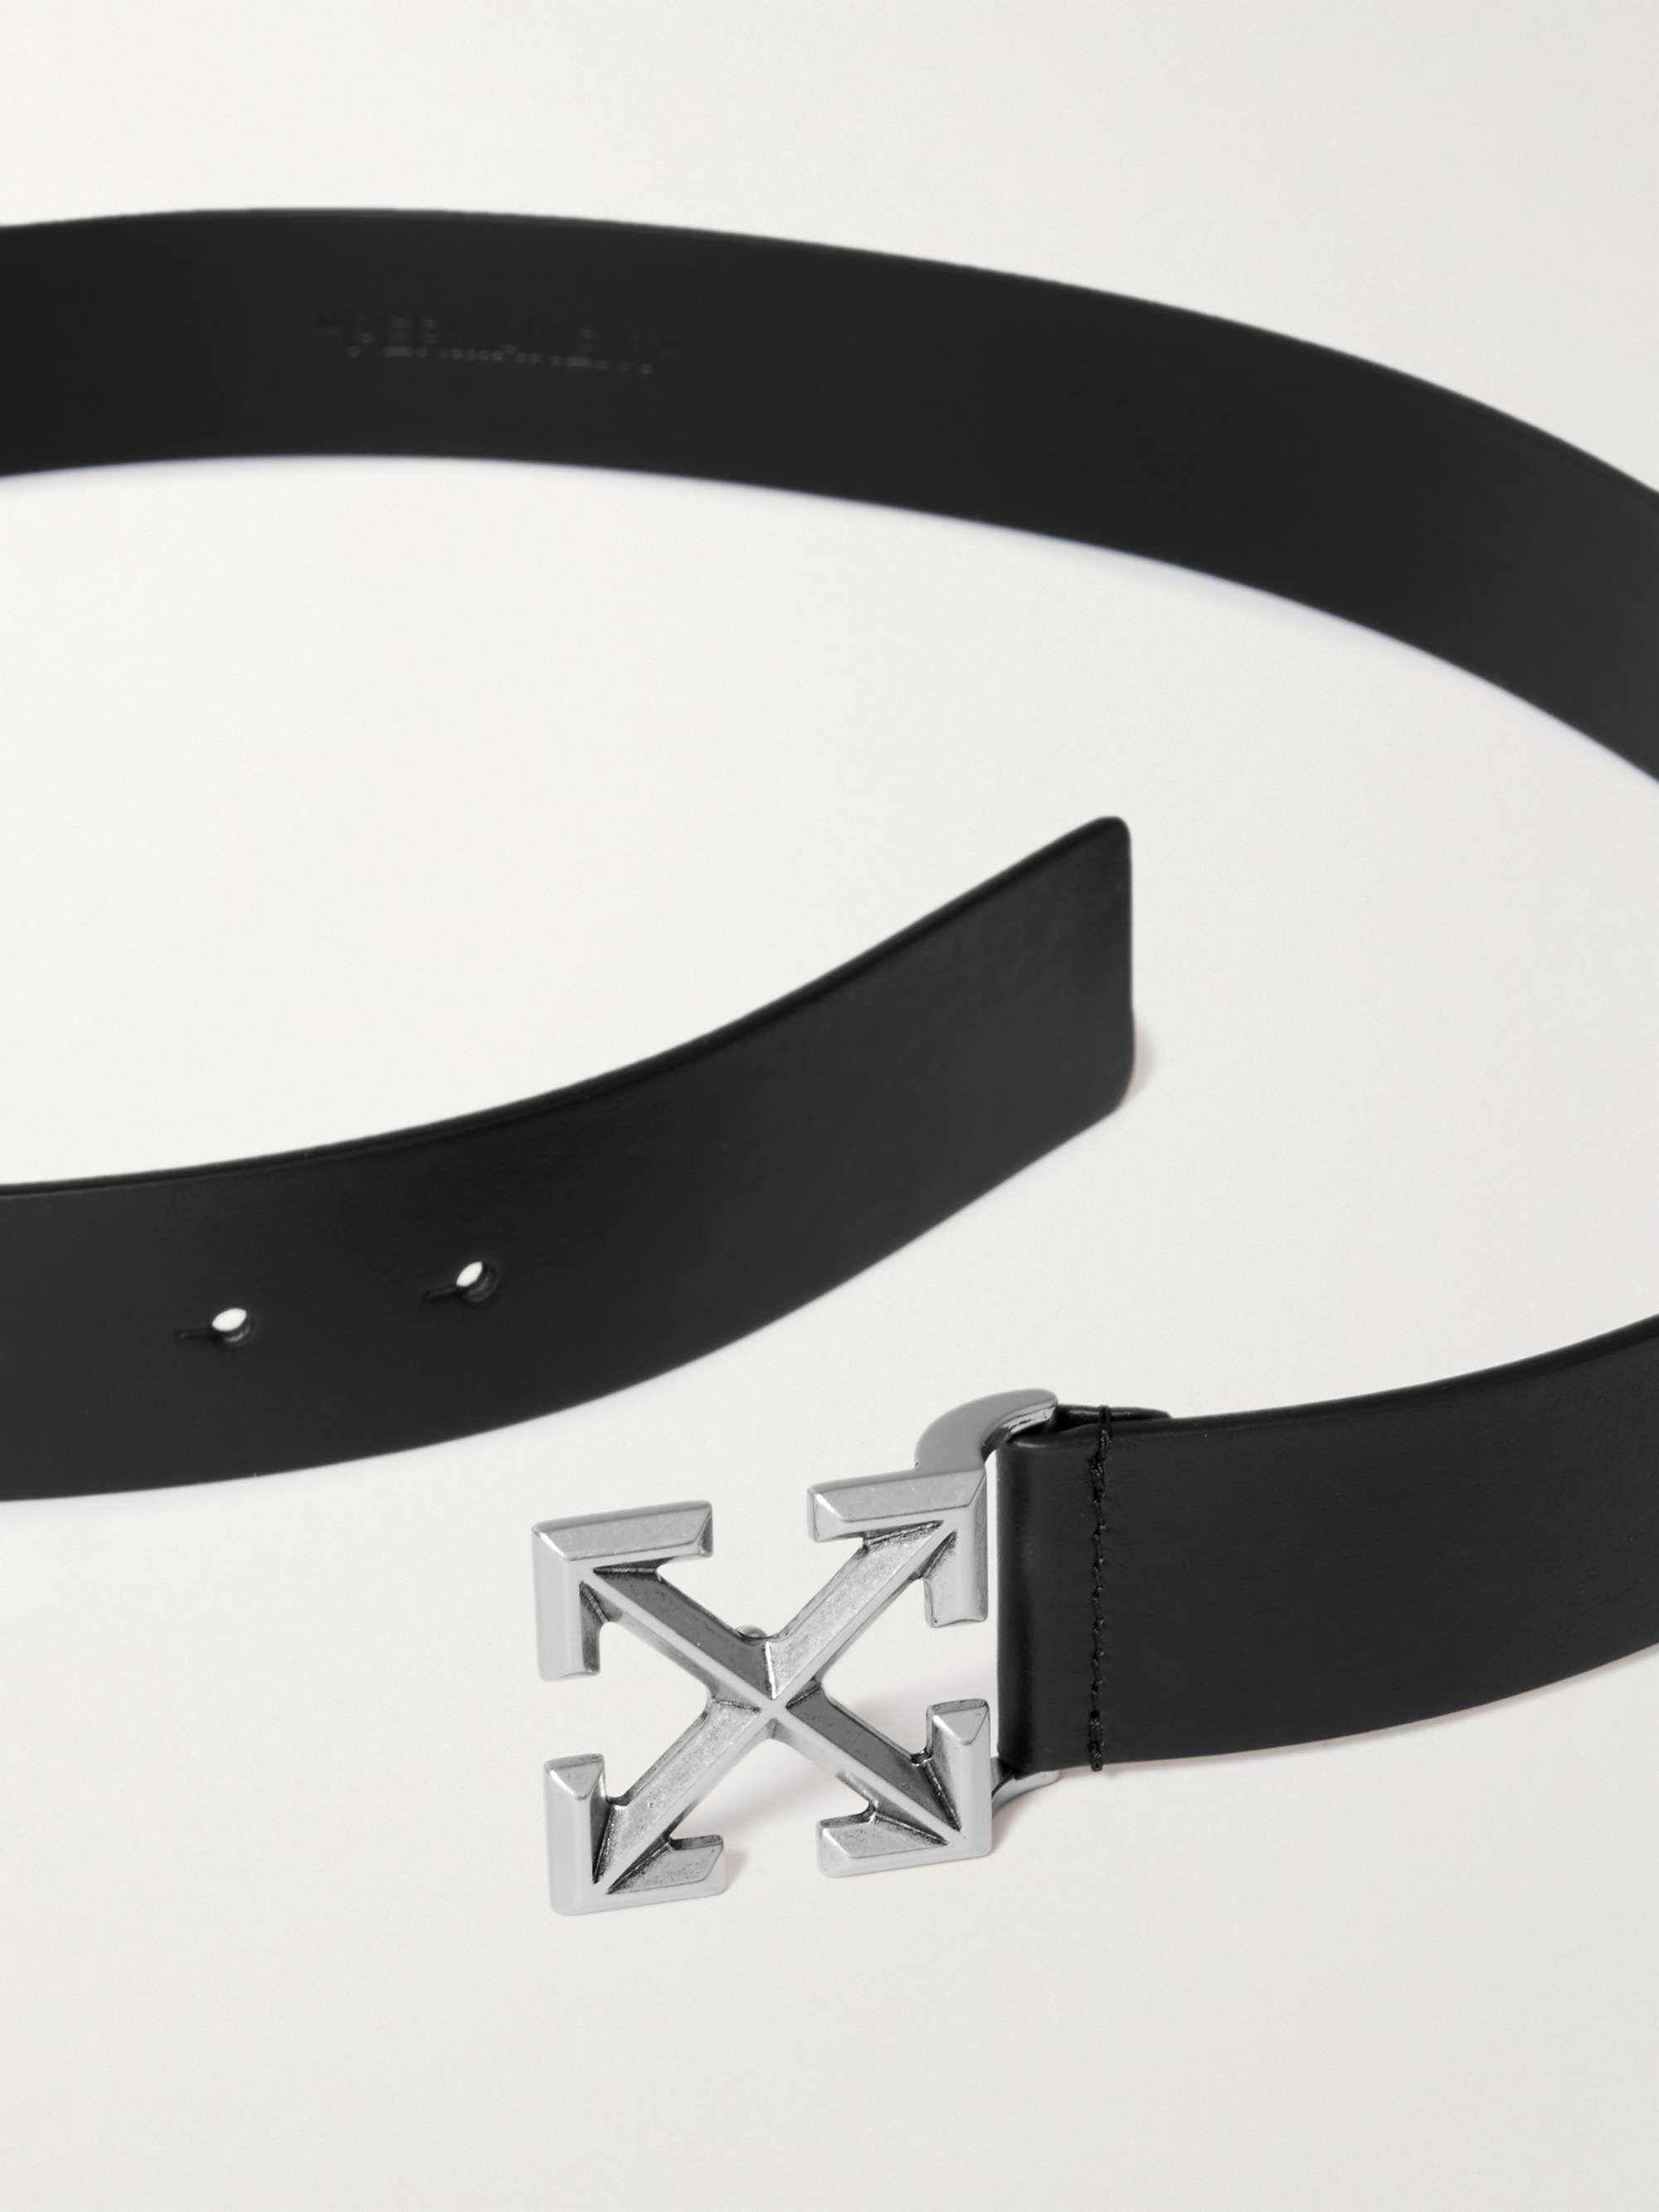 Off-White Black Leather Arrow Belt - 95